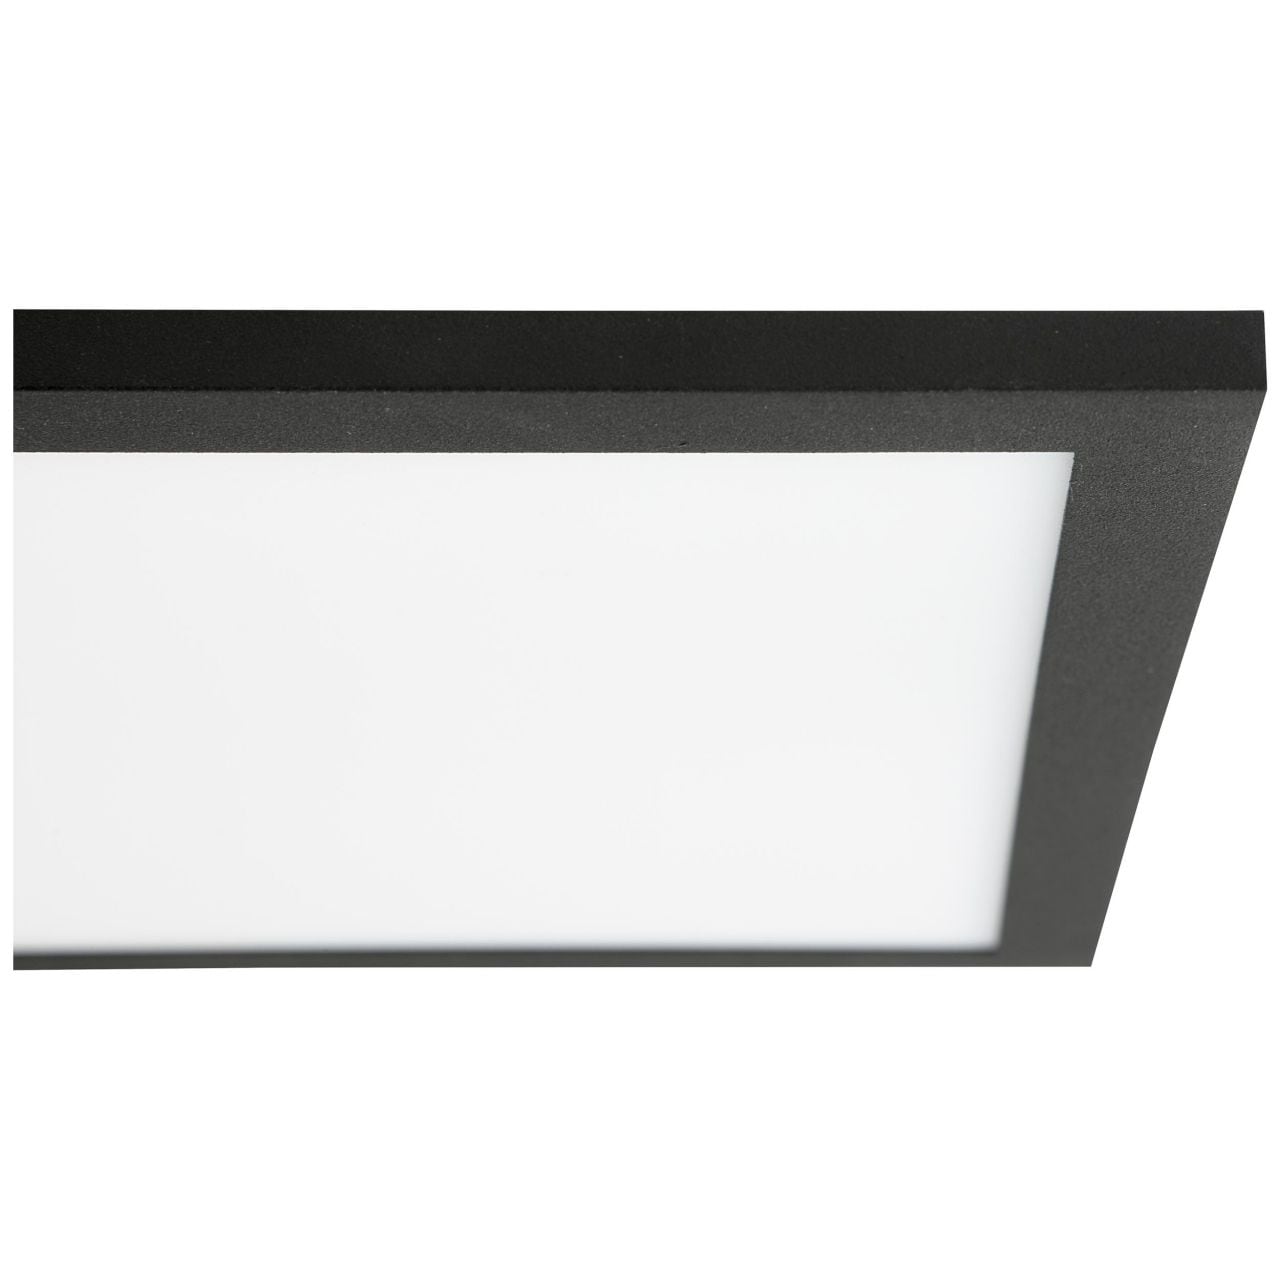 Brilliant LED Panel »Buffi«, 1 flammig-flammig, 120 x 30 cm, 4000 lm, kaltweiß, Metall/Kunststoff, sand schwarz